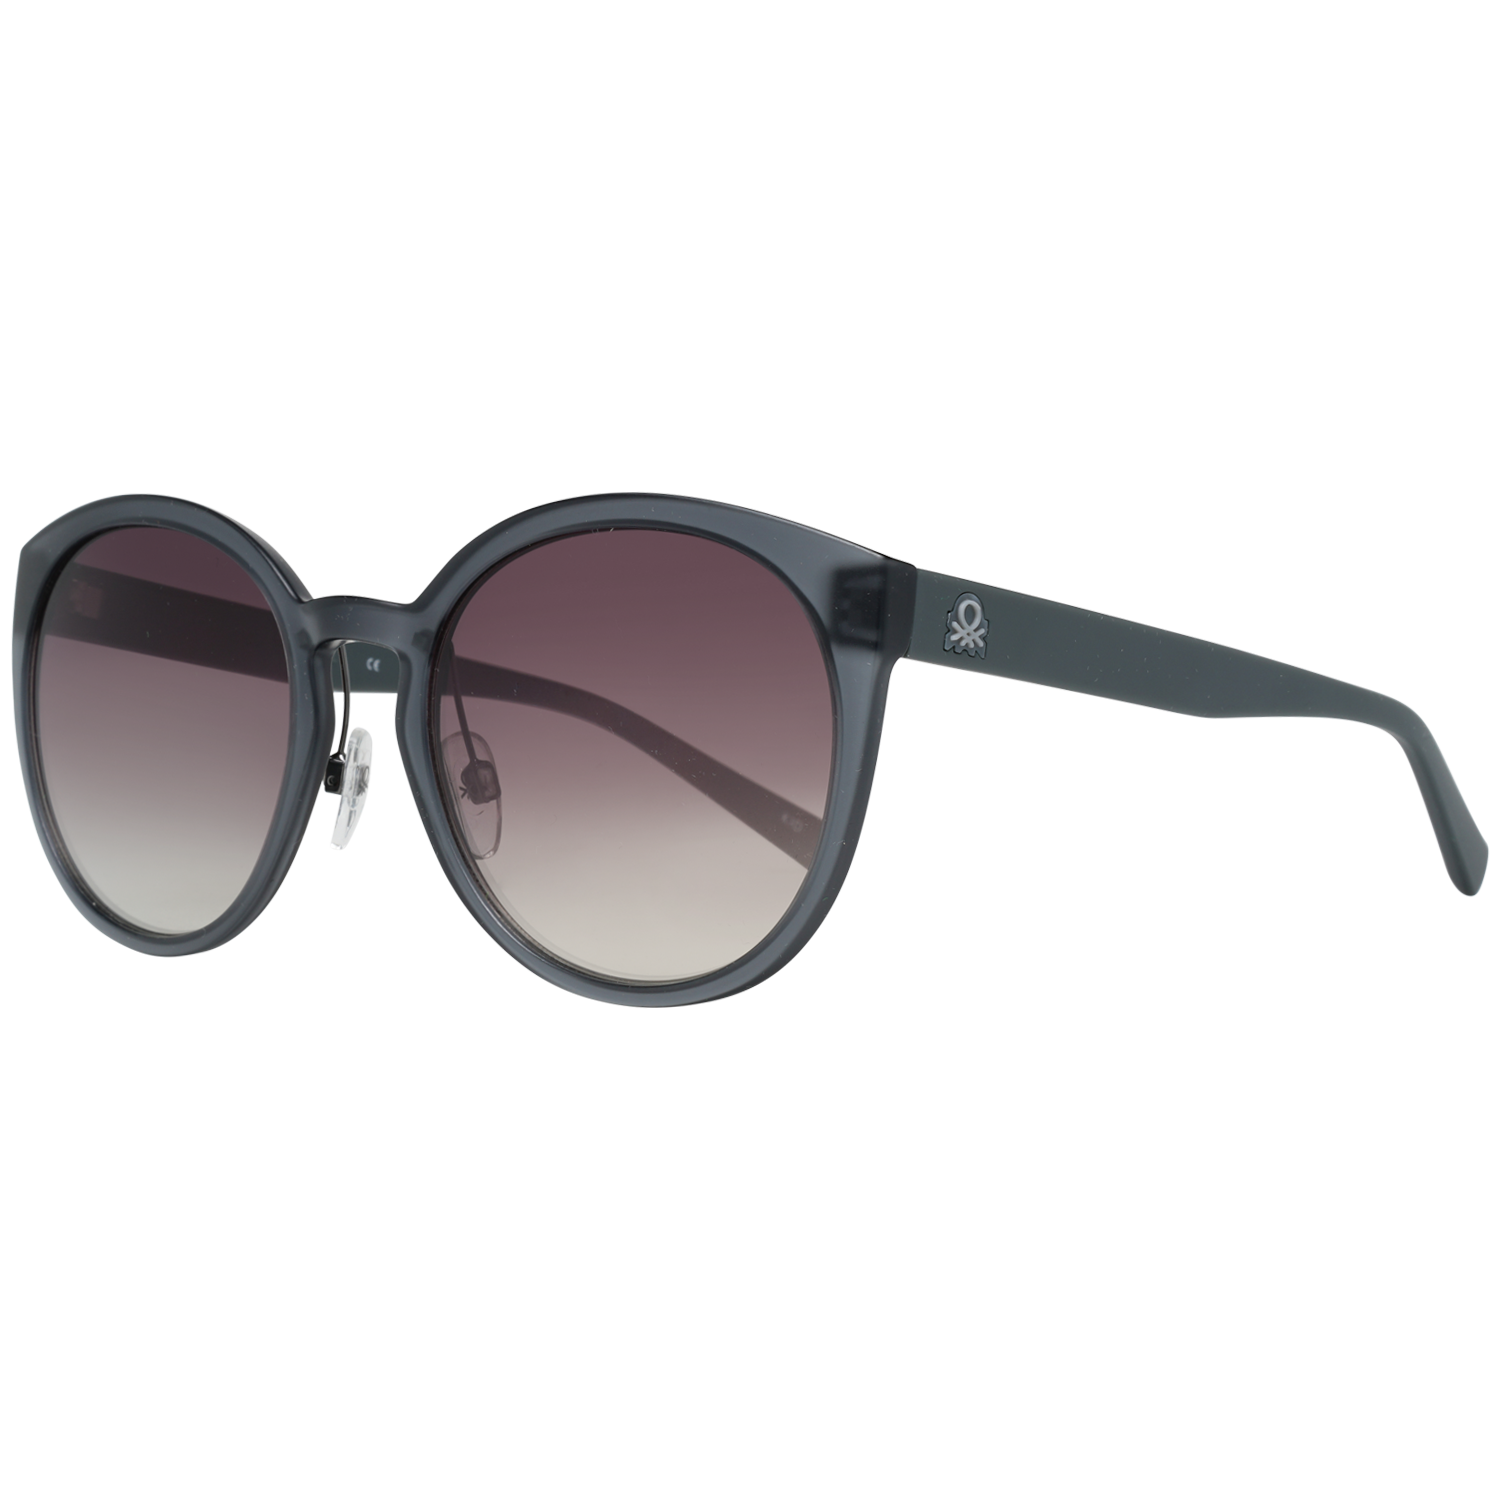 Benetton Sunglasses BE5010 921 57 Grey